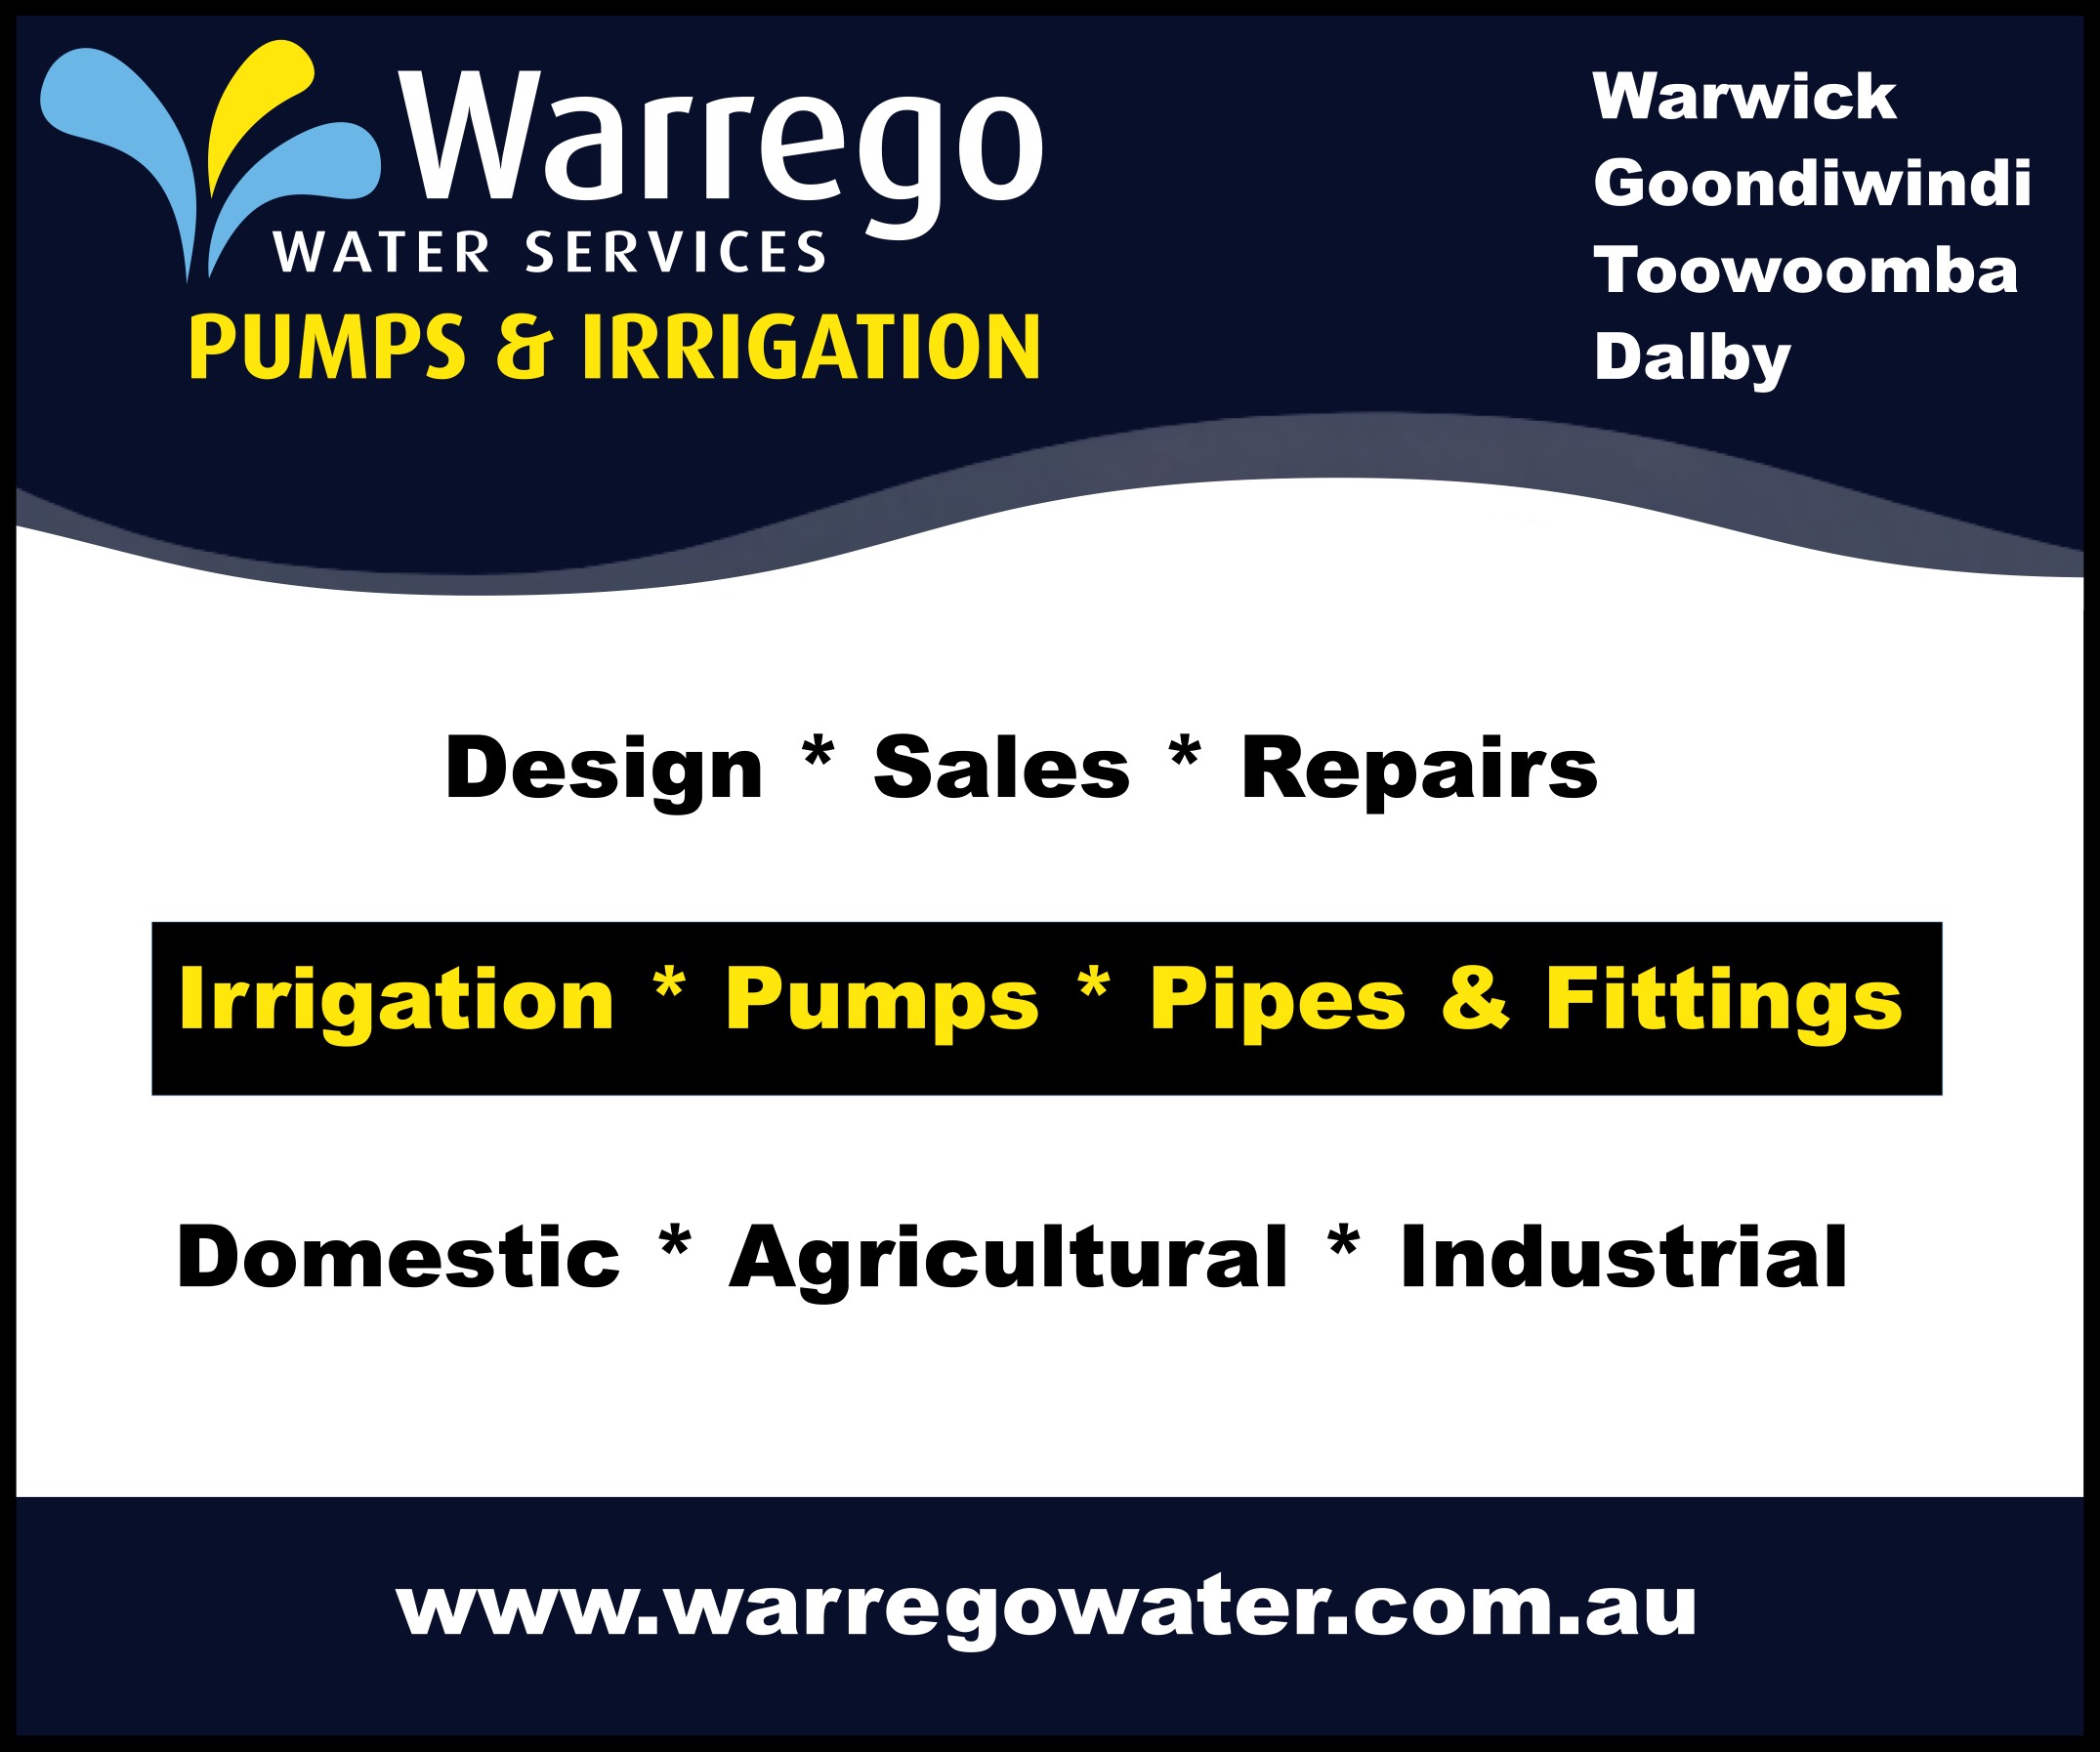 Warrego Water Services - Warwick Pty Ltd - advertisement